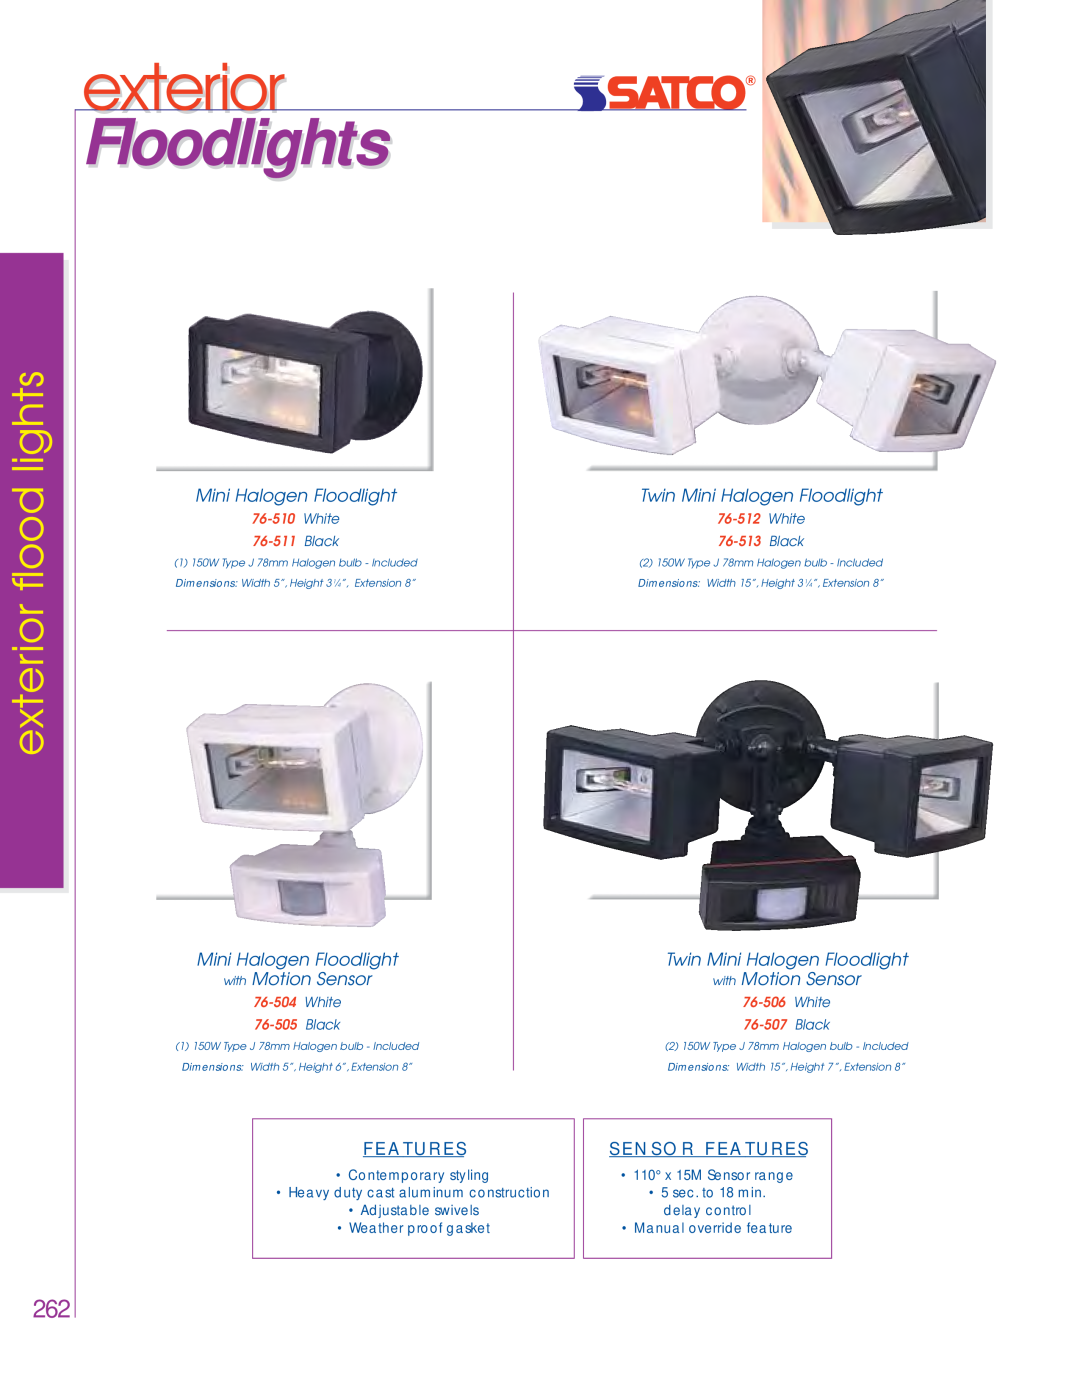 Satco Products 76-693 Twin Mini Halogen Floodlight, with Motion Sensor, • 110 x 15M Sensor range, • 5 sec. to 18 min 